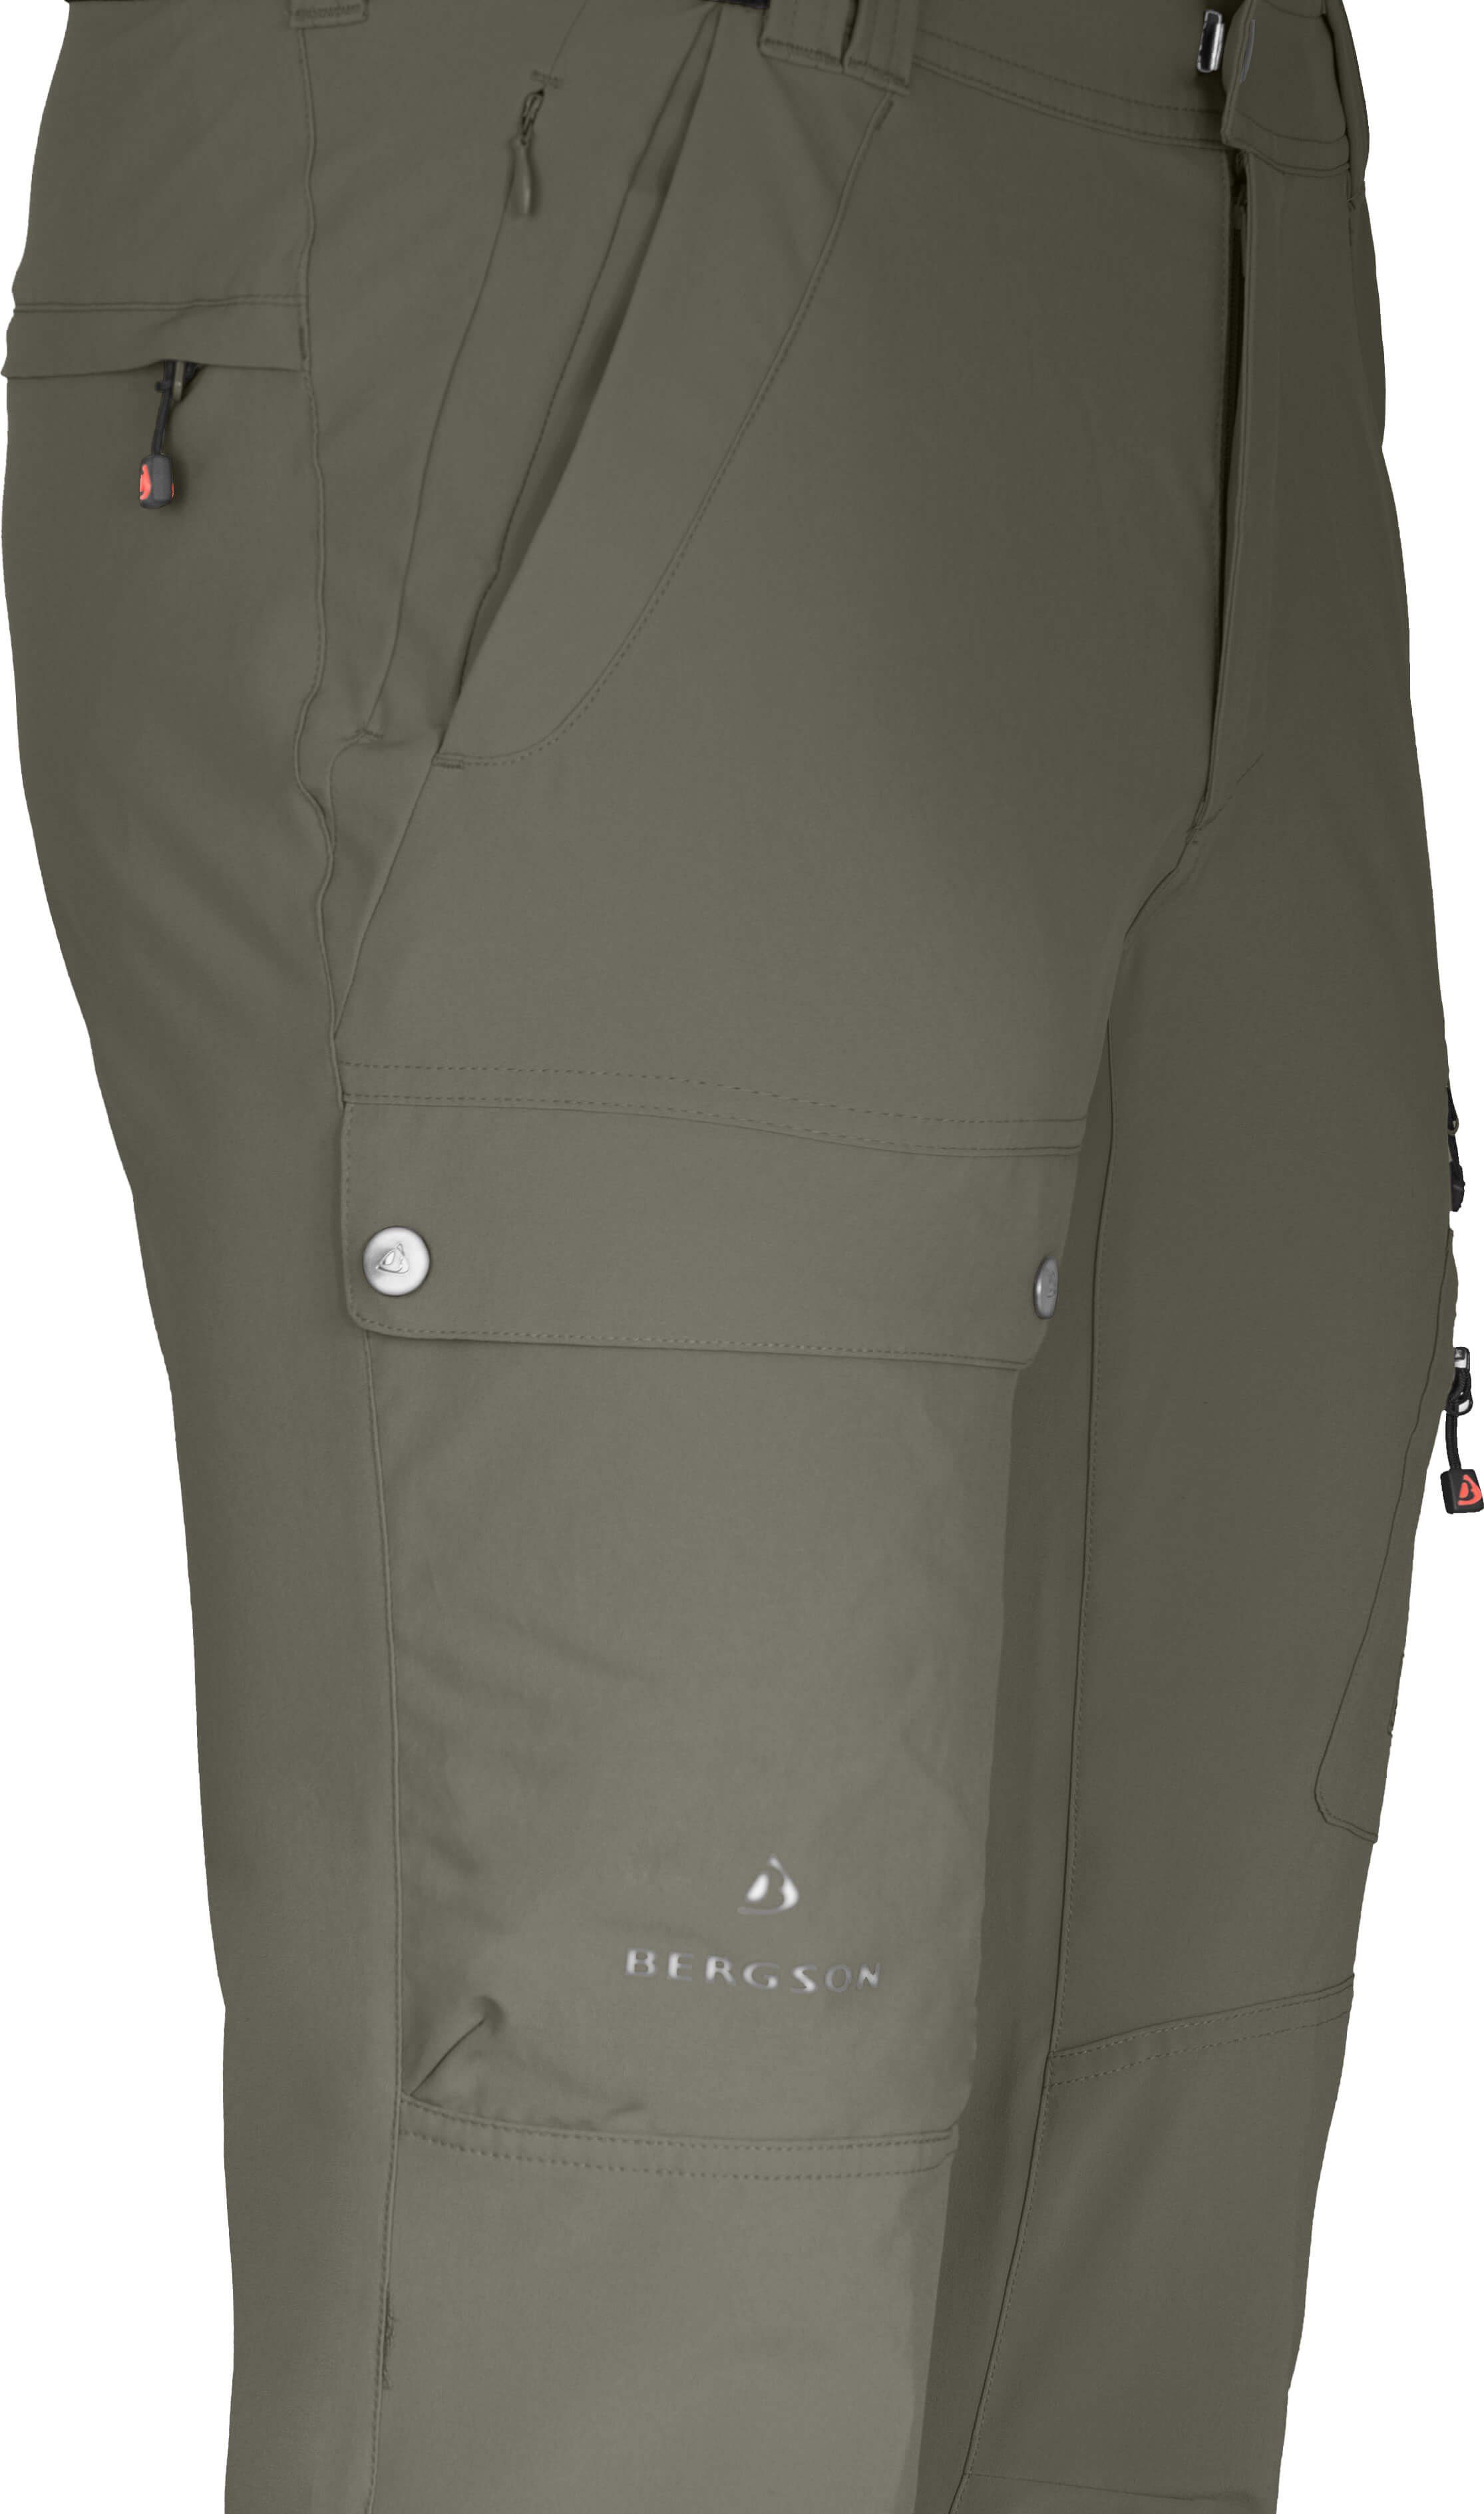 FROSLEV Wanderhose, Taschen, Normalgrößen, COMFORT recycelt, Outdoorhose 8 elastisch, grau/grün Bergson Herren